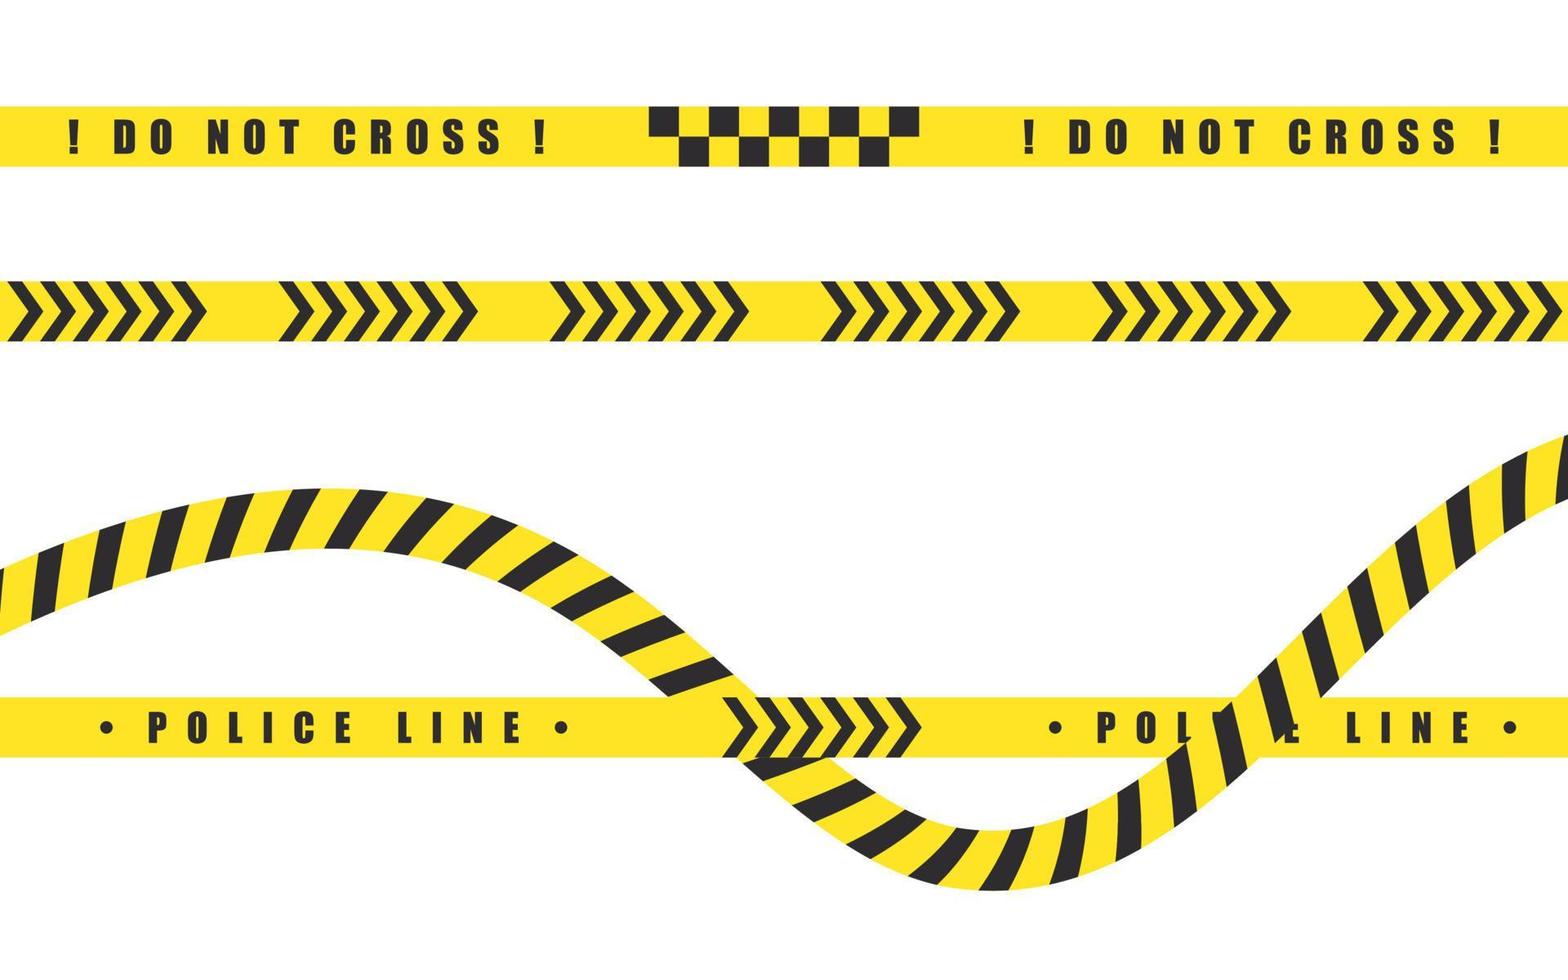 amarillo advertencia cintas colocar. calificación cinta. barrera cinta. precaución cintas vector escalable gráficos